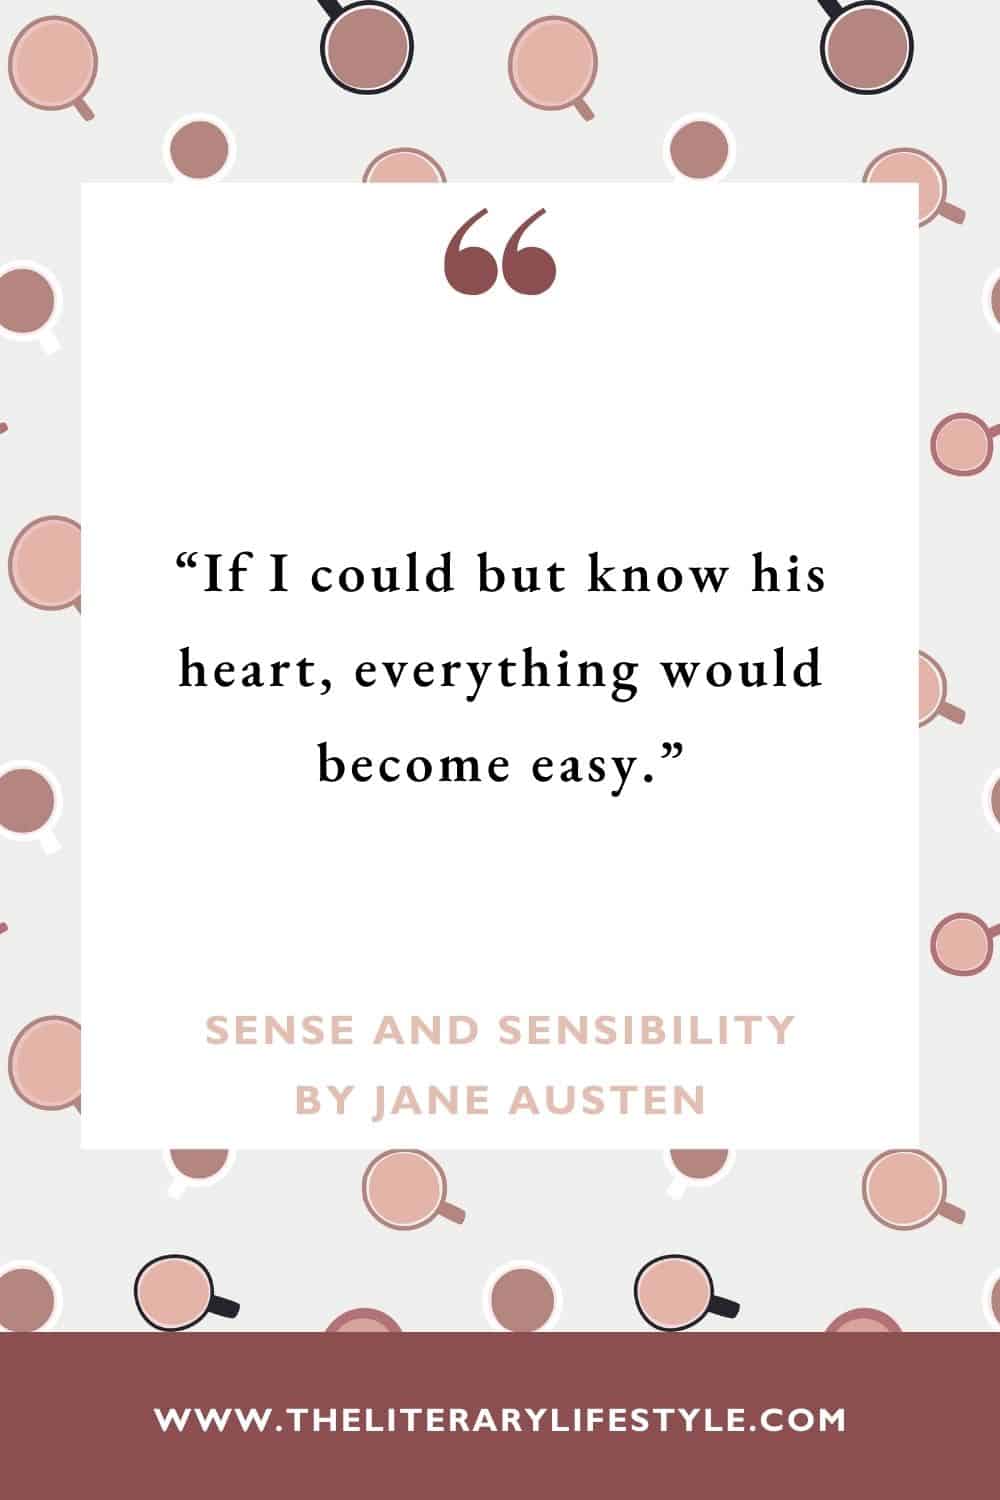 sense and sensibility quote by jane austen